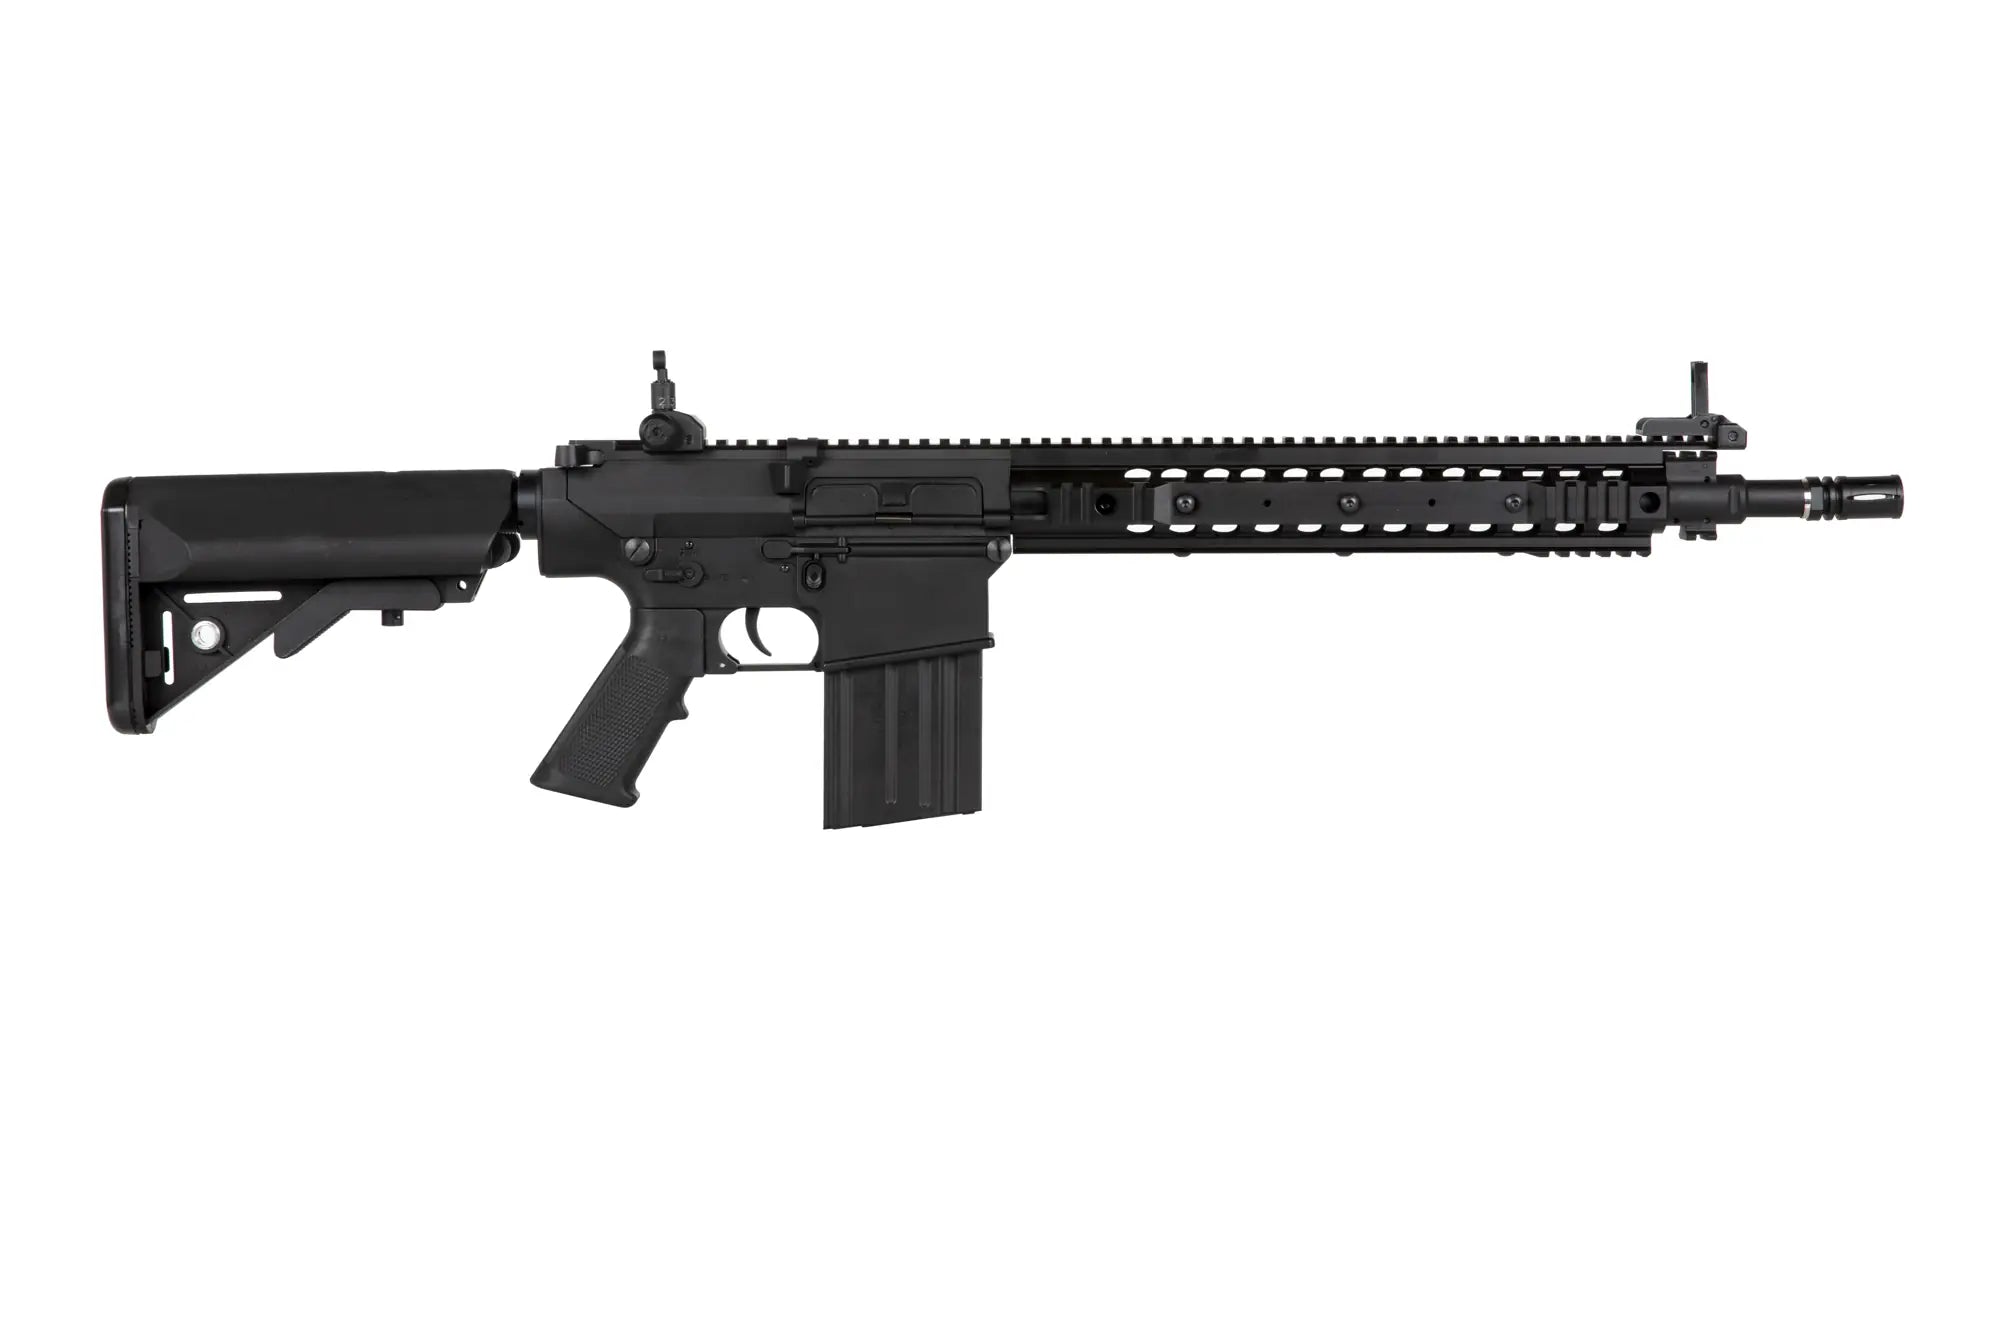  bb's rifle SR25 DMR 